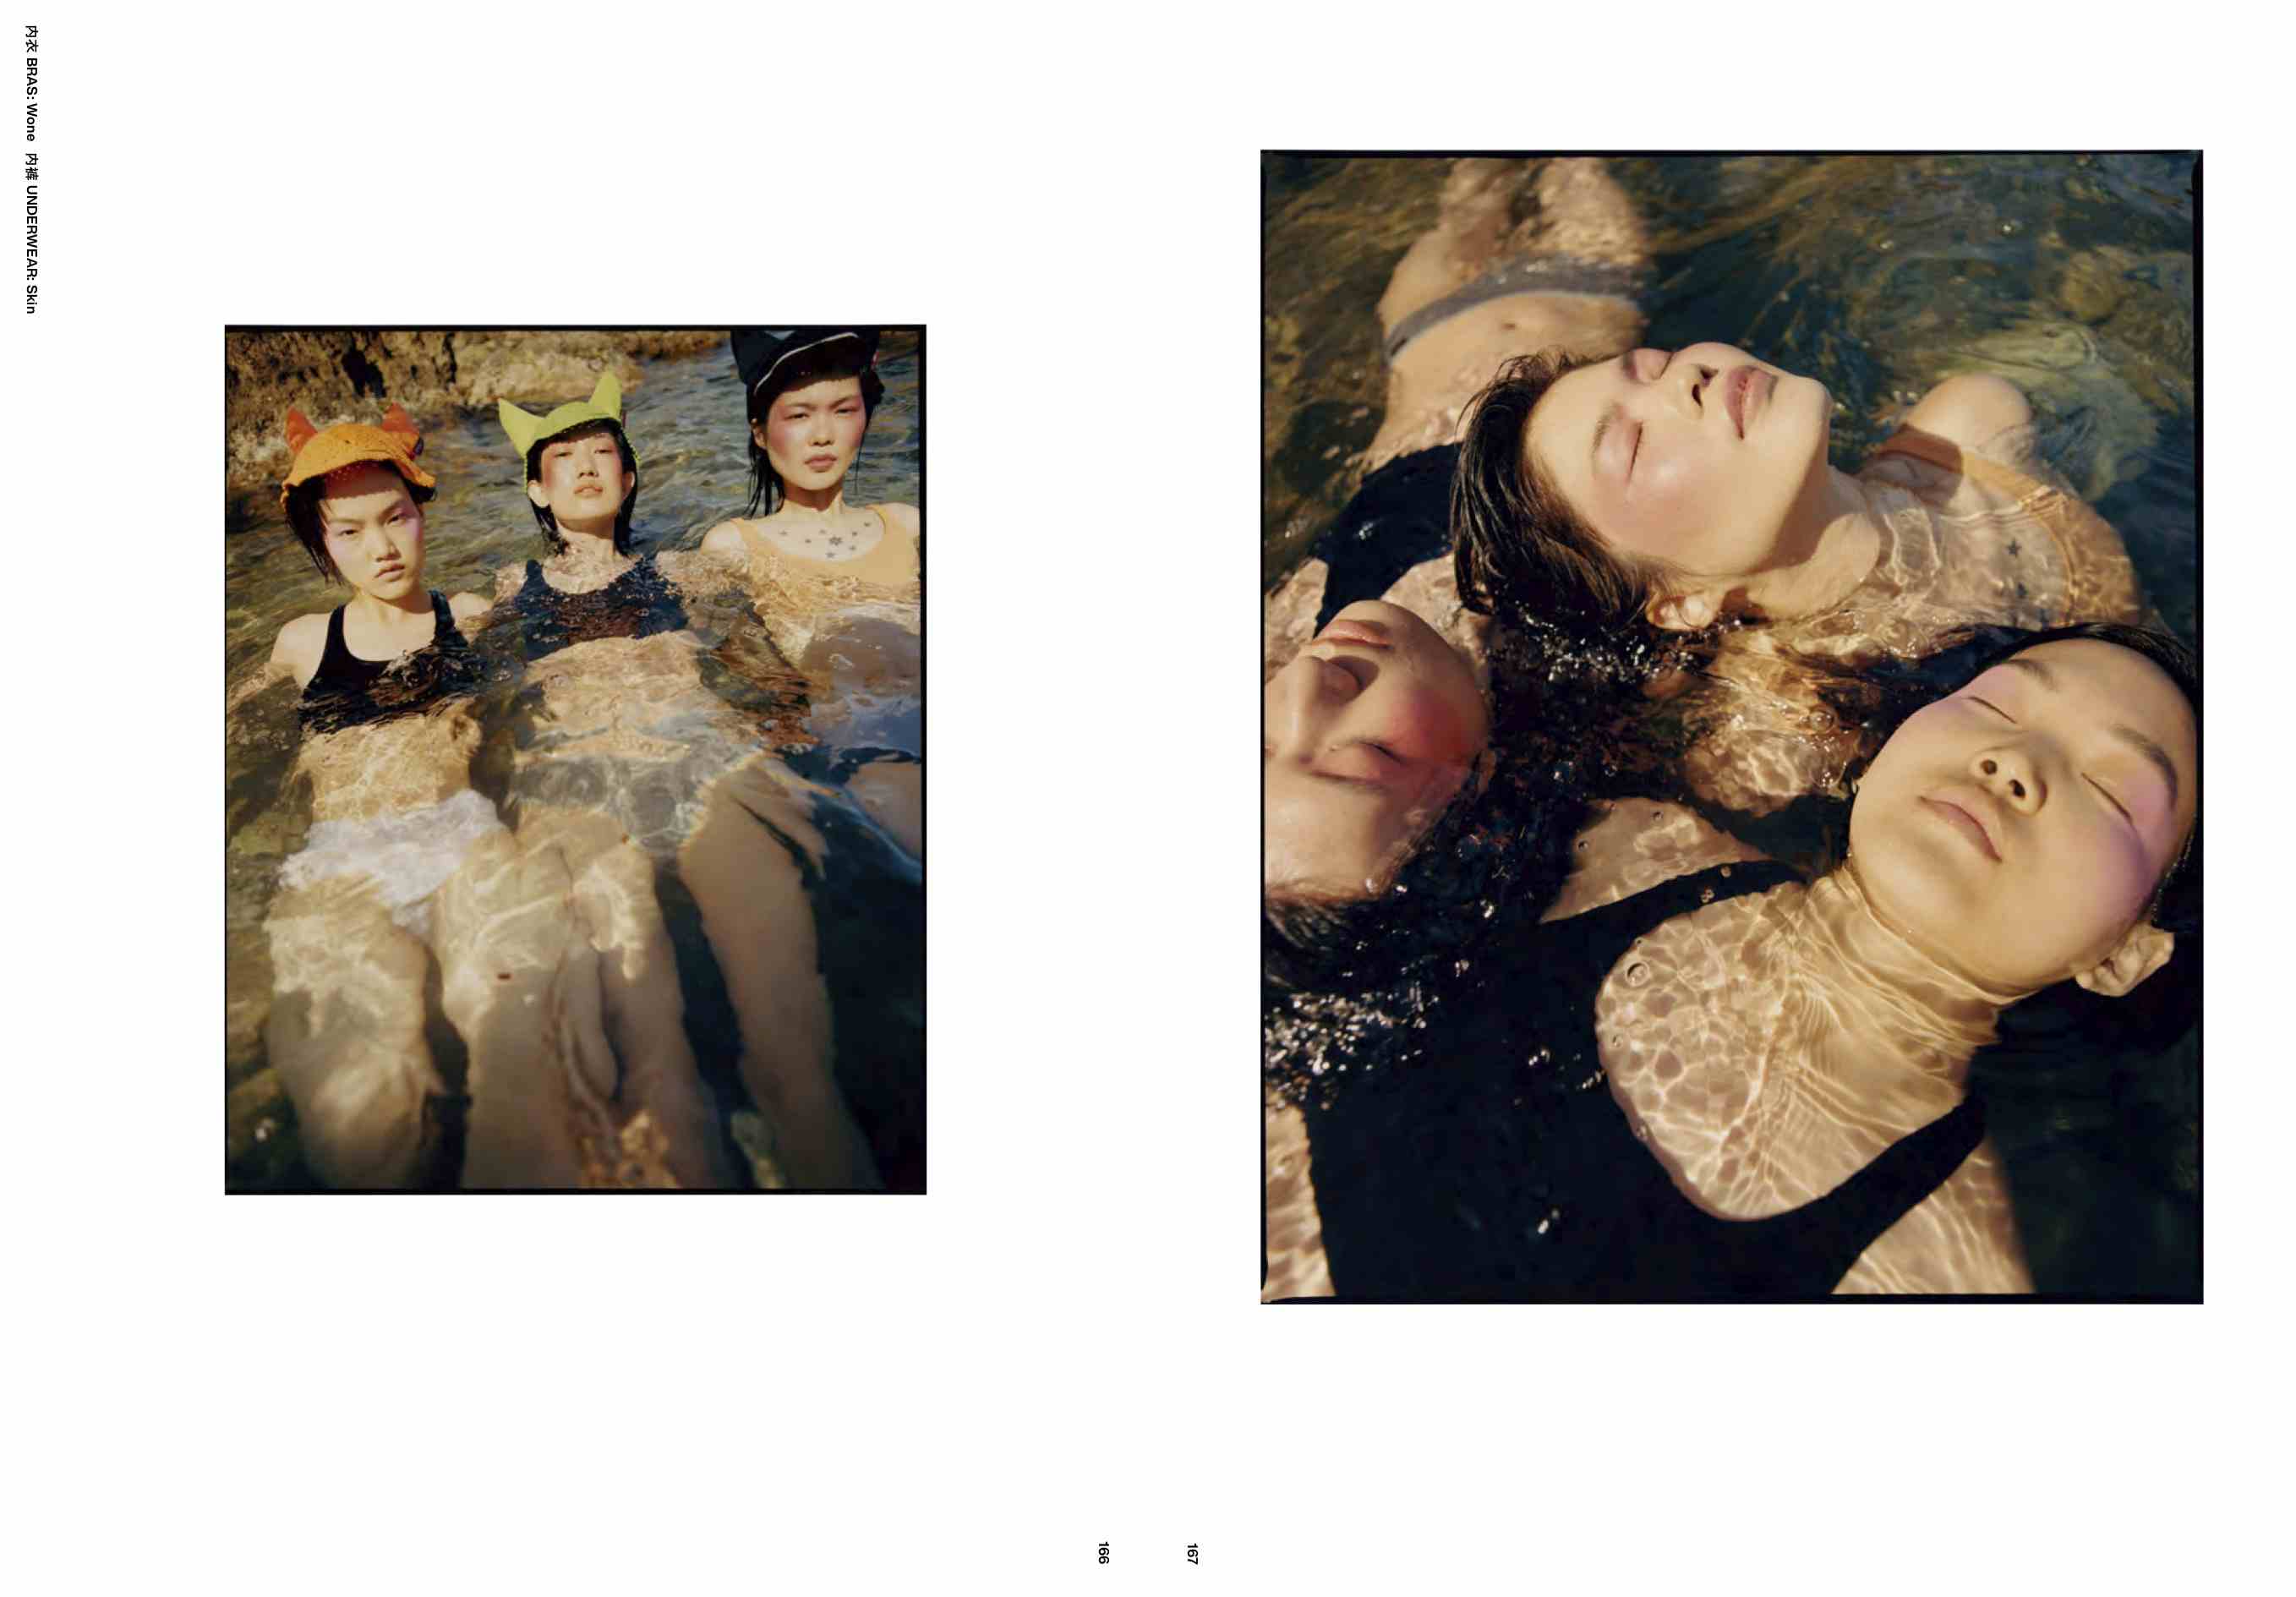 ROUGE - Fashion Book
Photographer: Nadine Ijewere
Model: Manami, Luna Wu, Pan
Stylist: Nathan Klein
Location: Tuscany